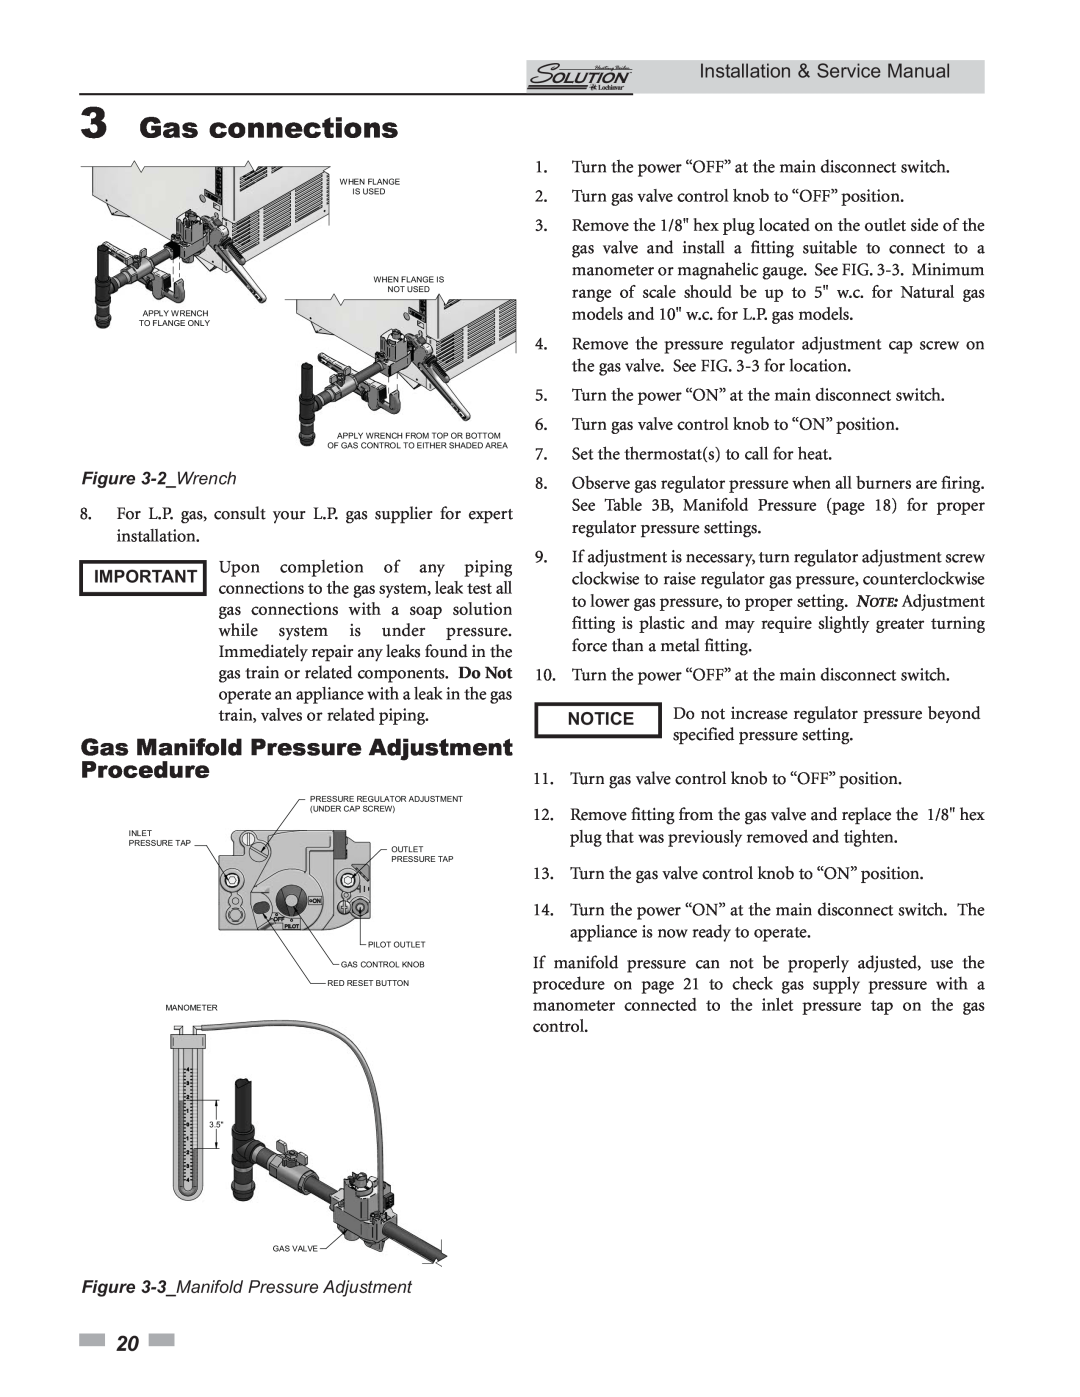 Lochinvar 000 - 260 Gas Manifold Pressure Adjustment Procedure, 3Gas connections, 2 Wrench, 3 ManifoldPressure Adjustment 